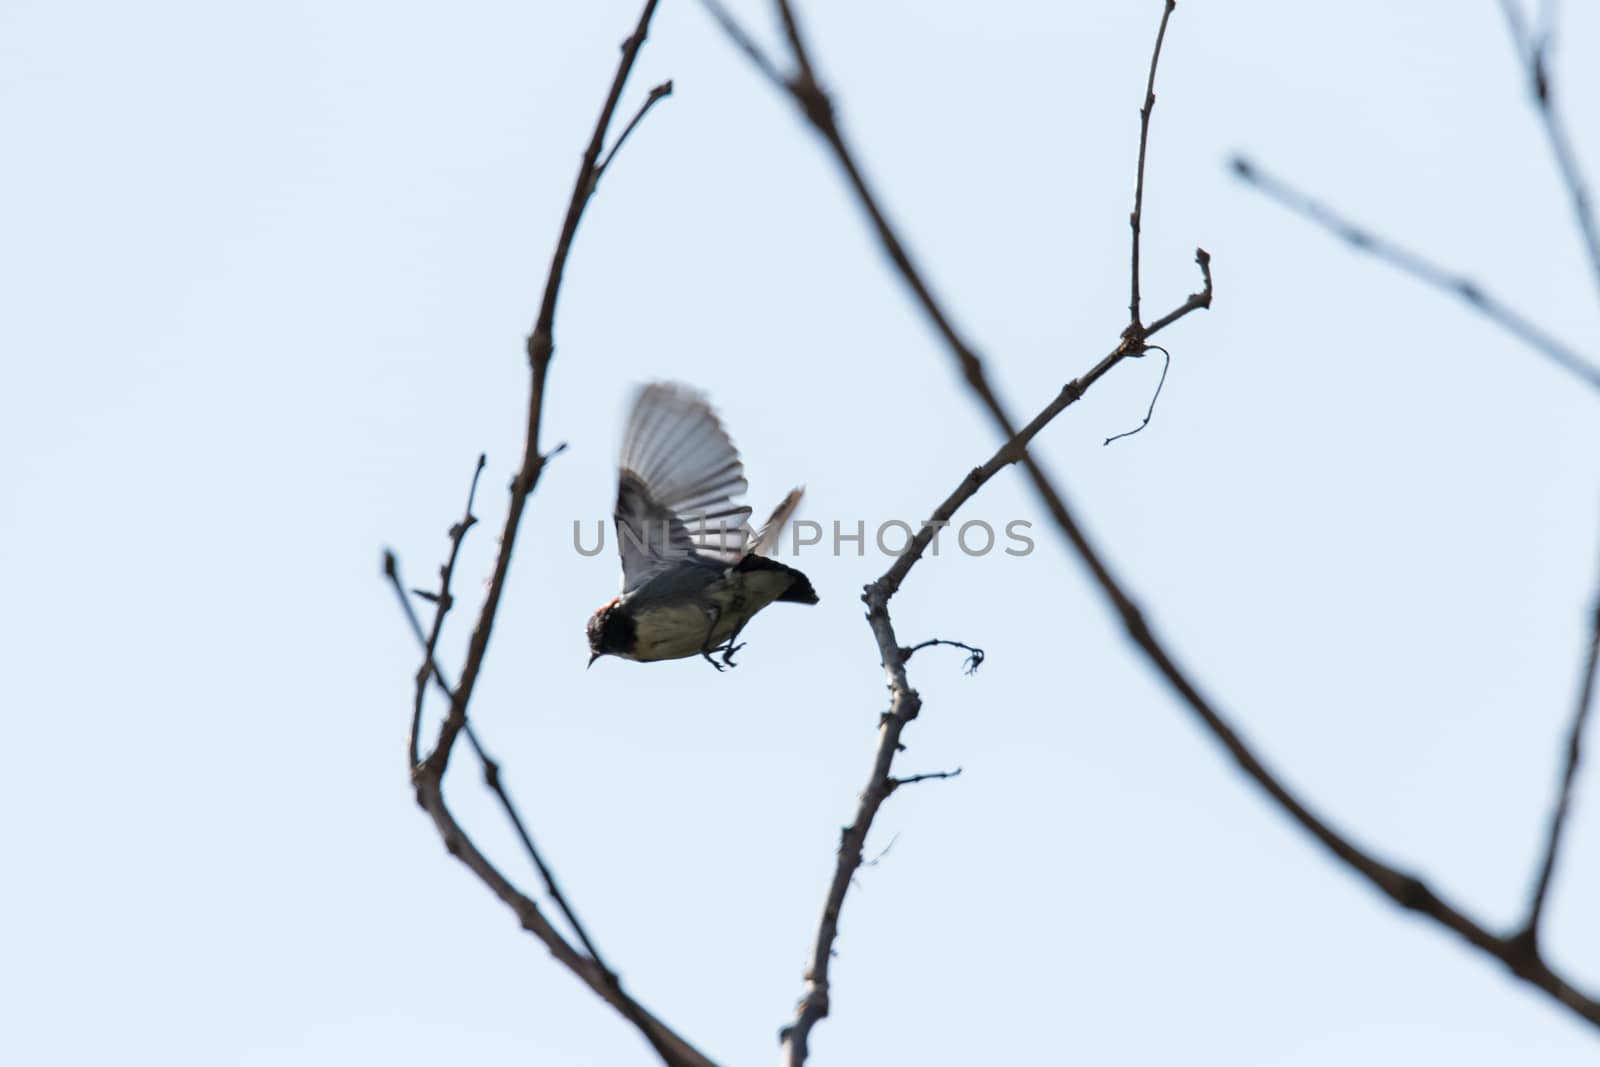 little bird escaping photographer in between stick